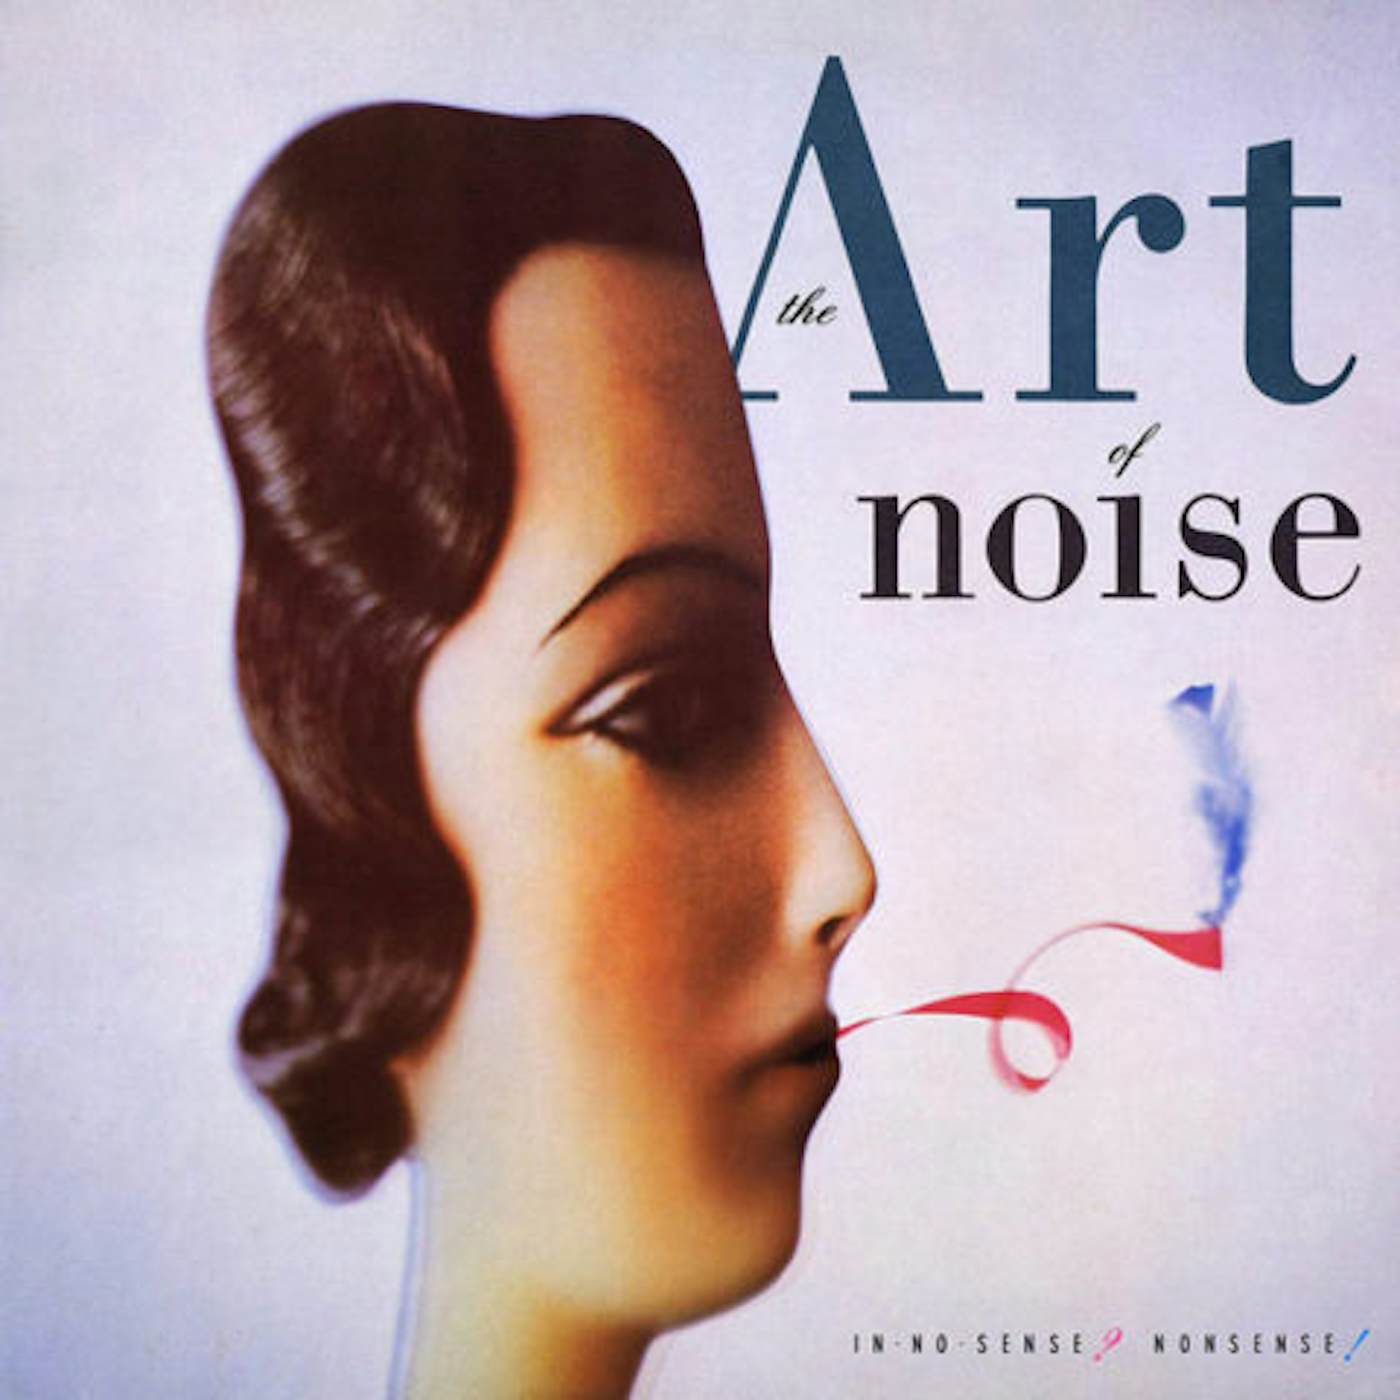 The Art Of Noise IN NO SENSE NONSENSE CD